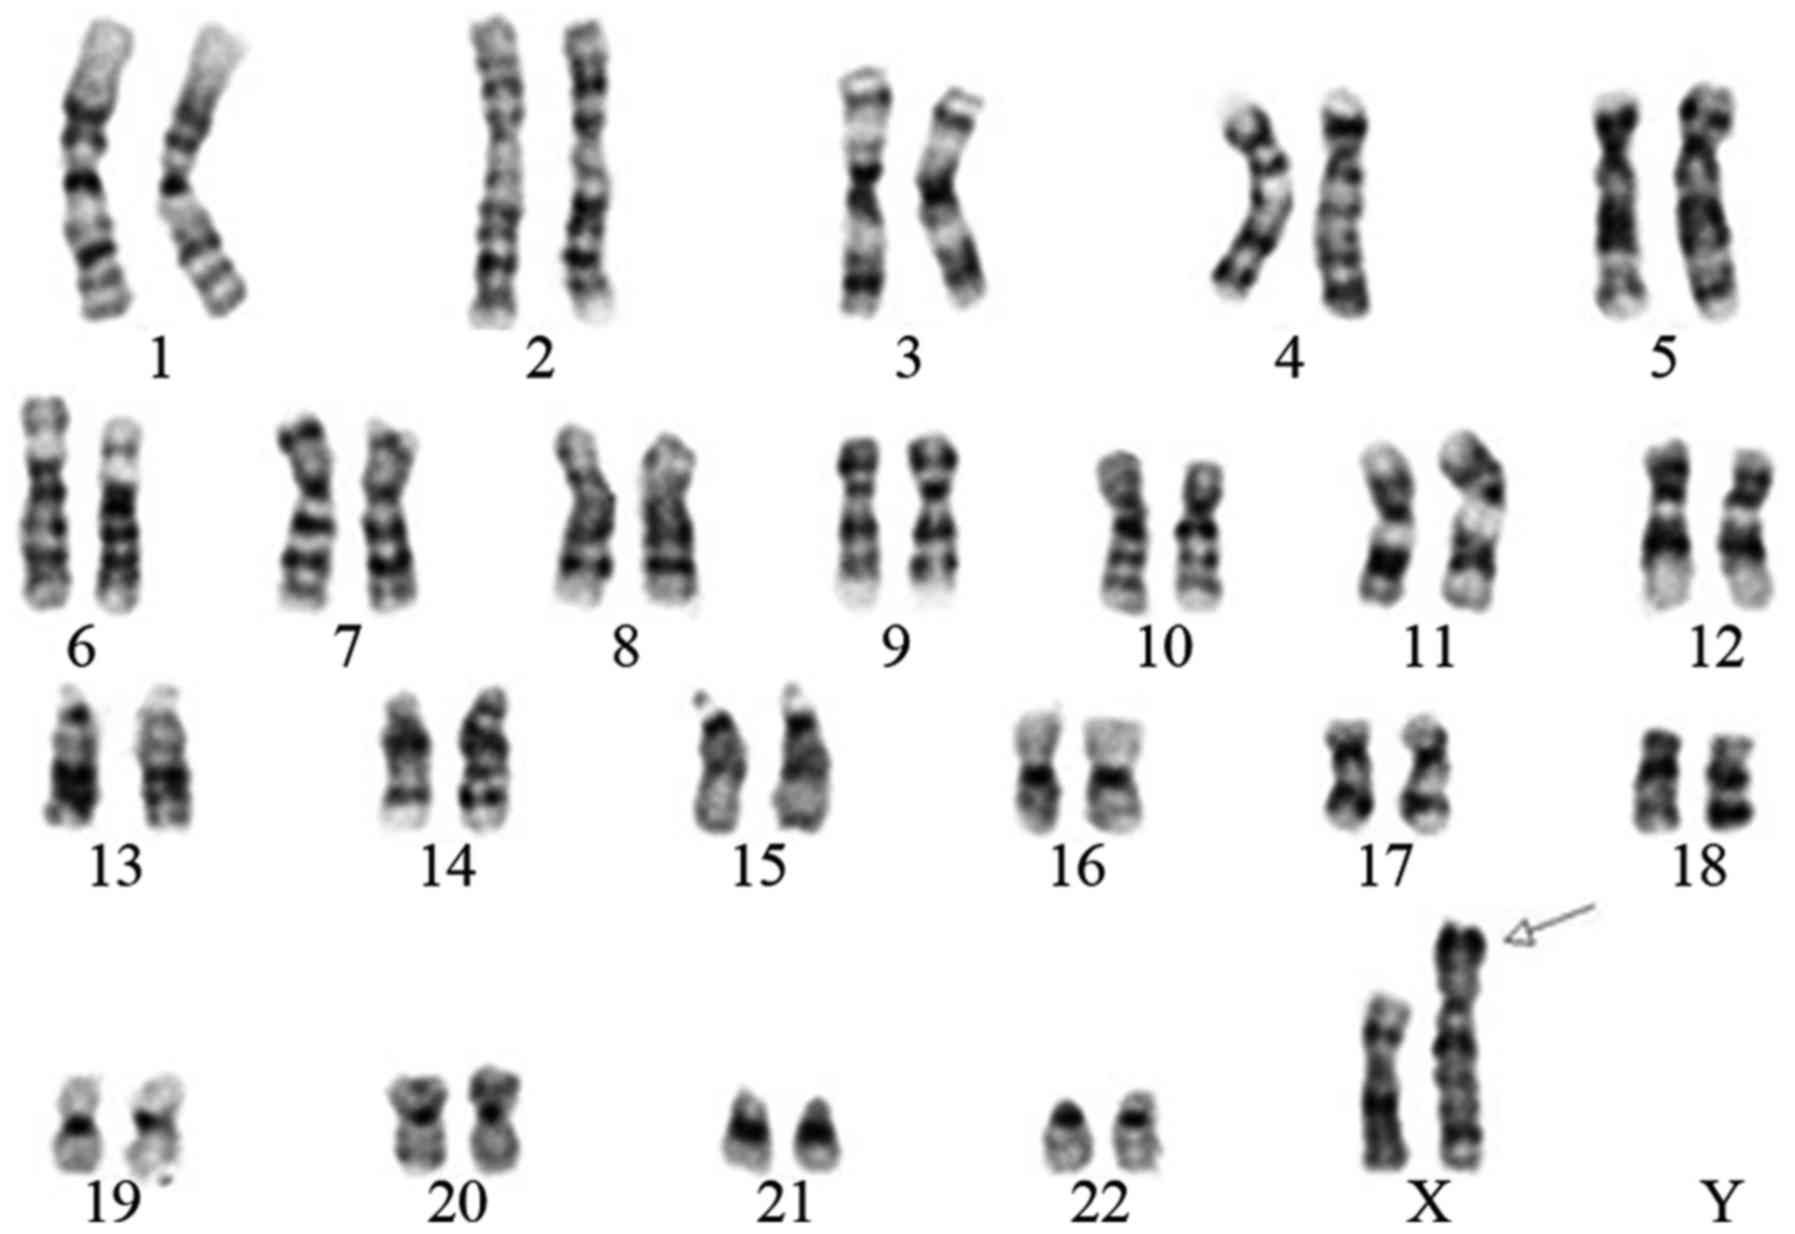 4 хромосома заболевание. Идиограмма кариотипа человека. Кариограмма хромосом. Нормальный кариотип человека 46 хромосом. Кариограмма хромосом мужчины.